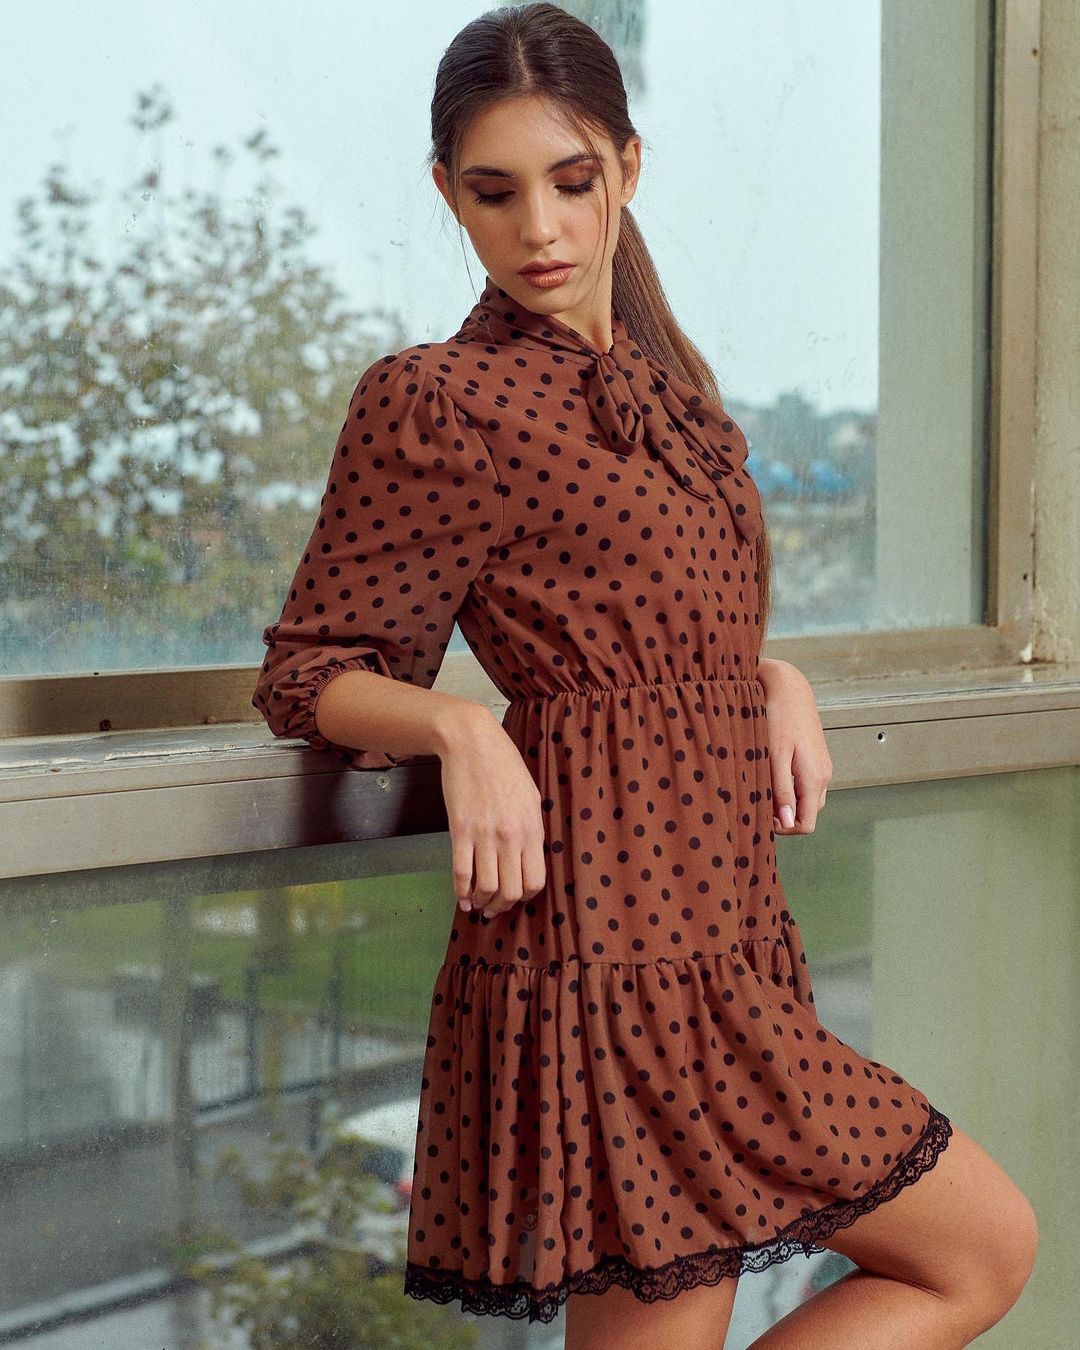 Italian model Valeria Sarnataro in Black Dotted Brown Dress During Photoshoot 11/19/2021 5